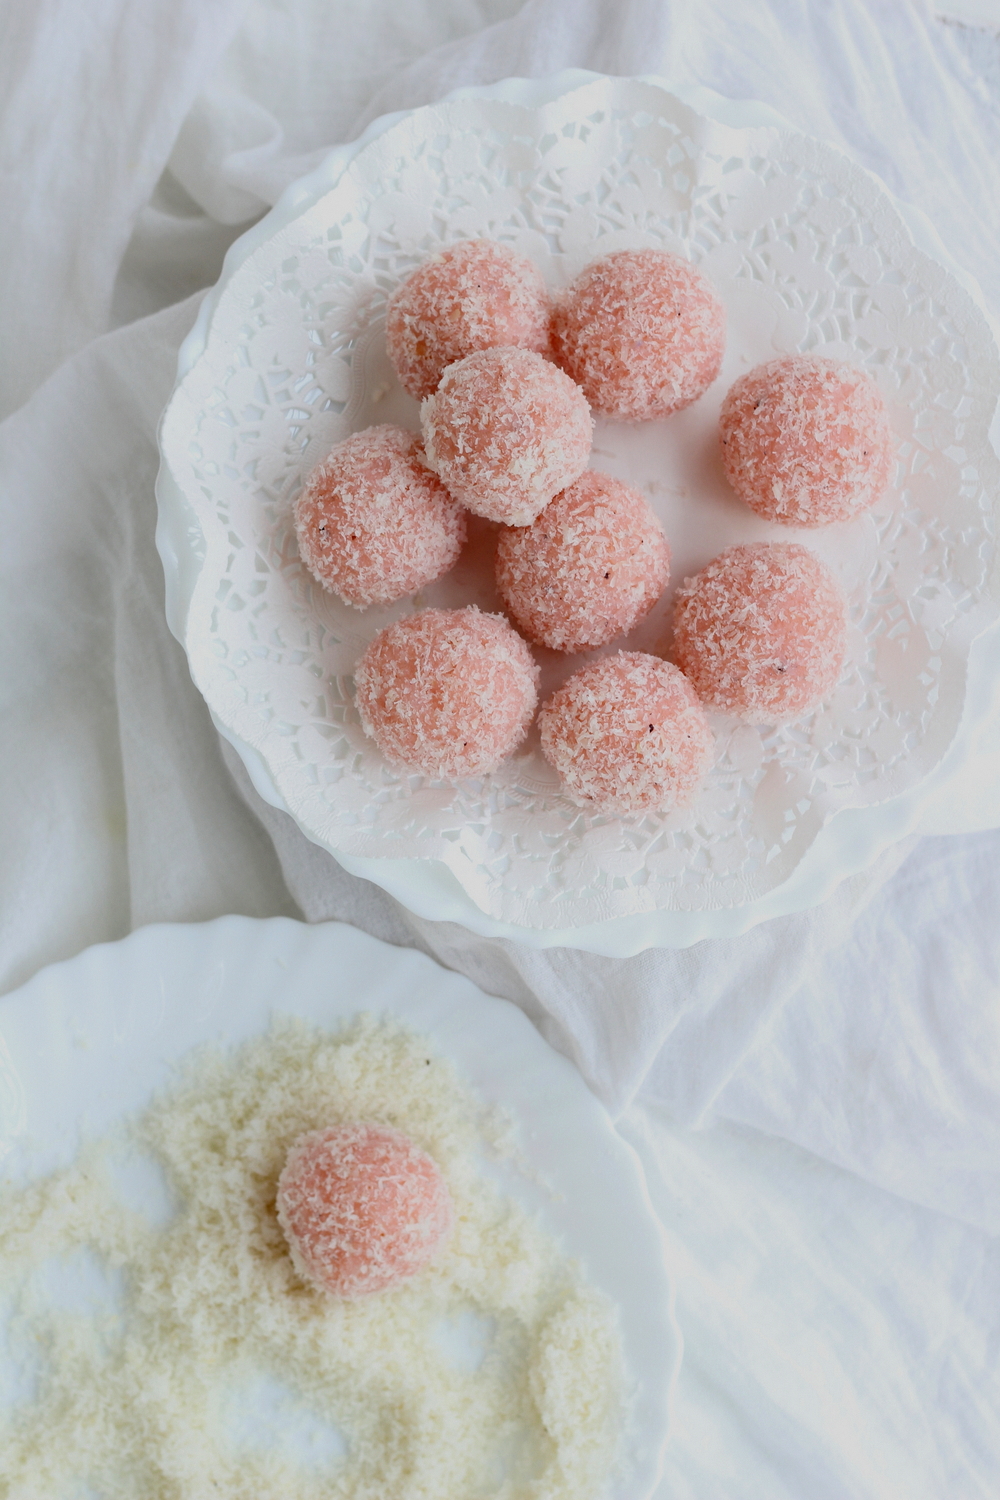 NARIYAL LADDU / नारियल के लड्डू (Sweet Coconut Balls)